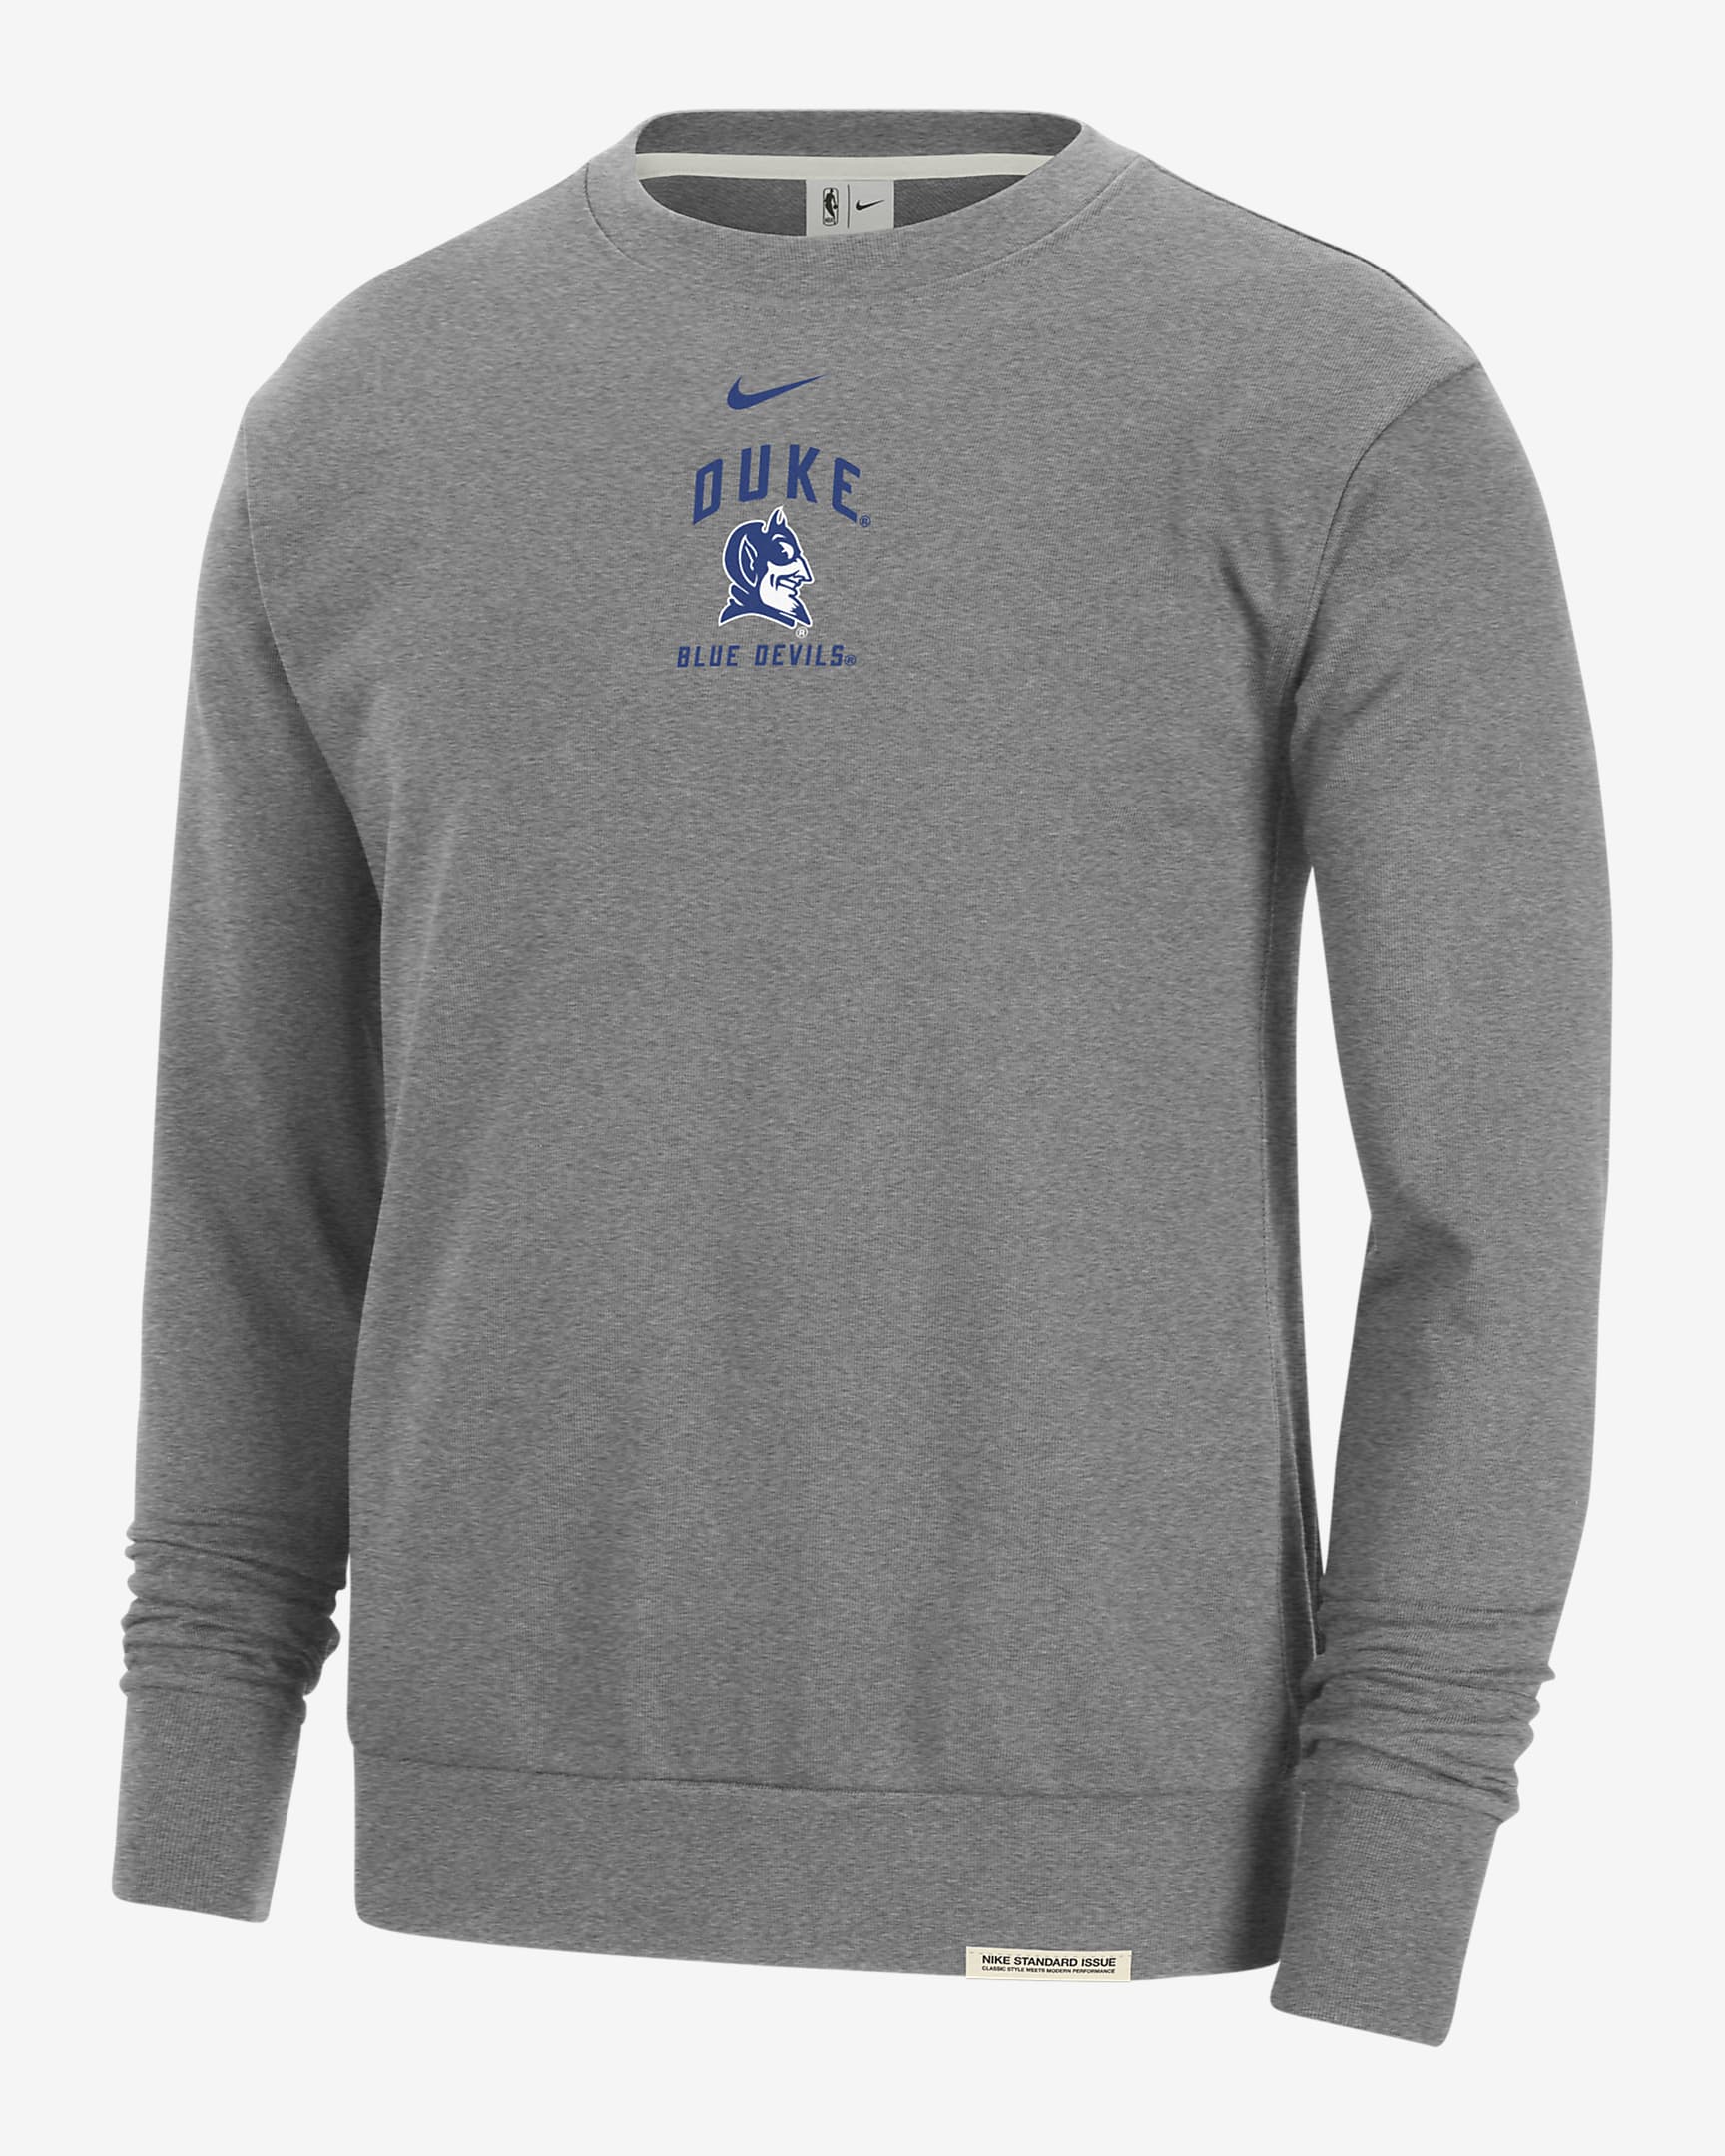 Duke Standard Issue Men's Nike College Fleece Crew-Neck Sweatshirt ...